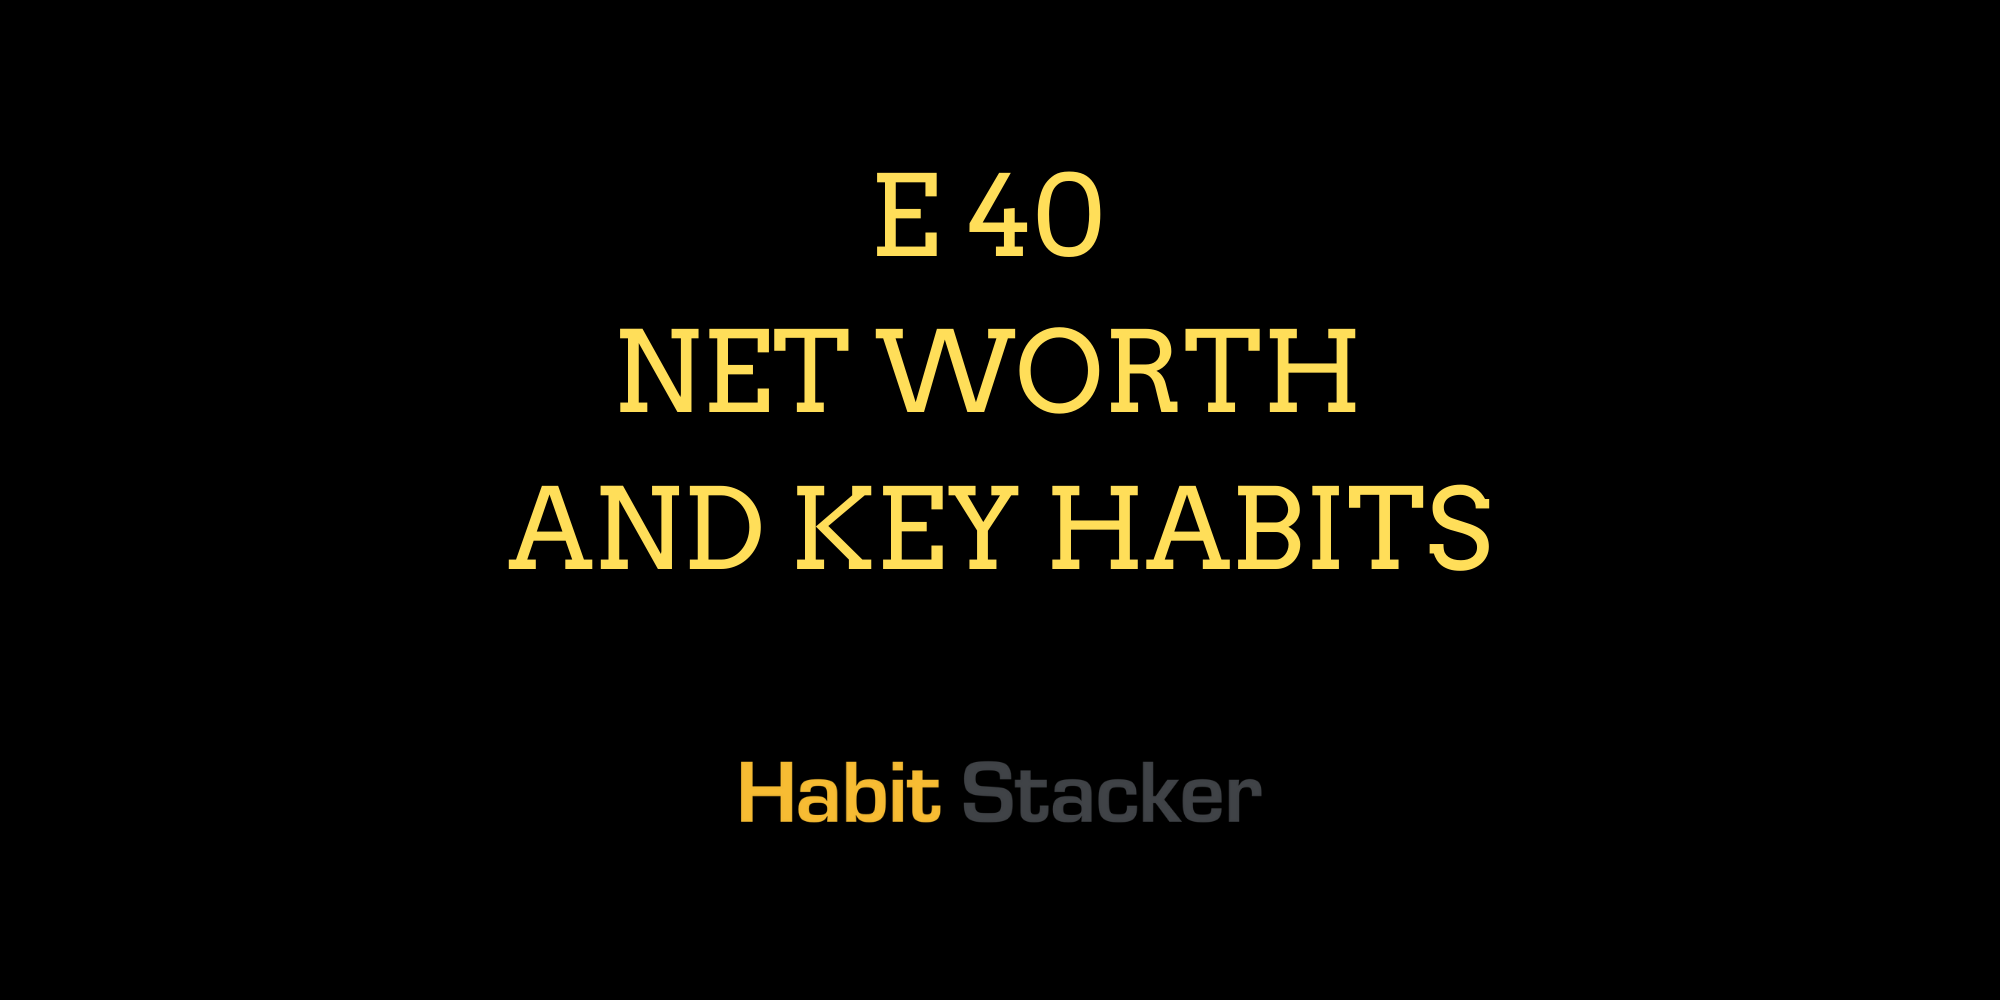 E 40 Net Worth and Key Habits